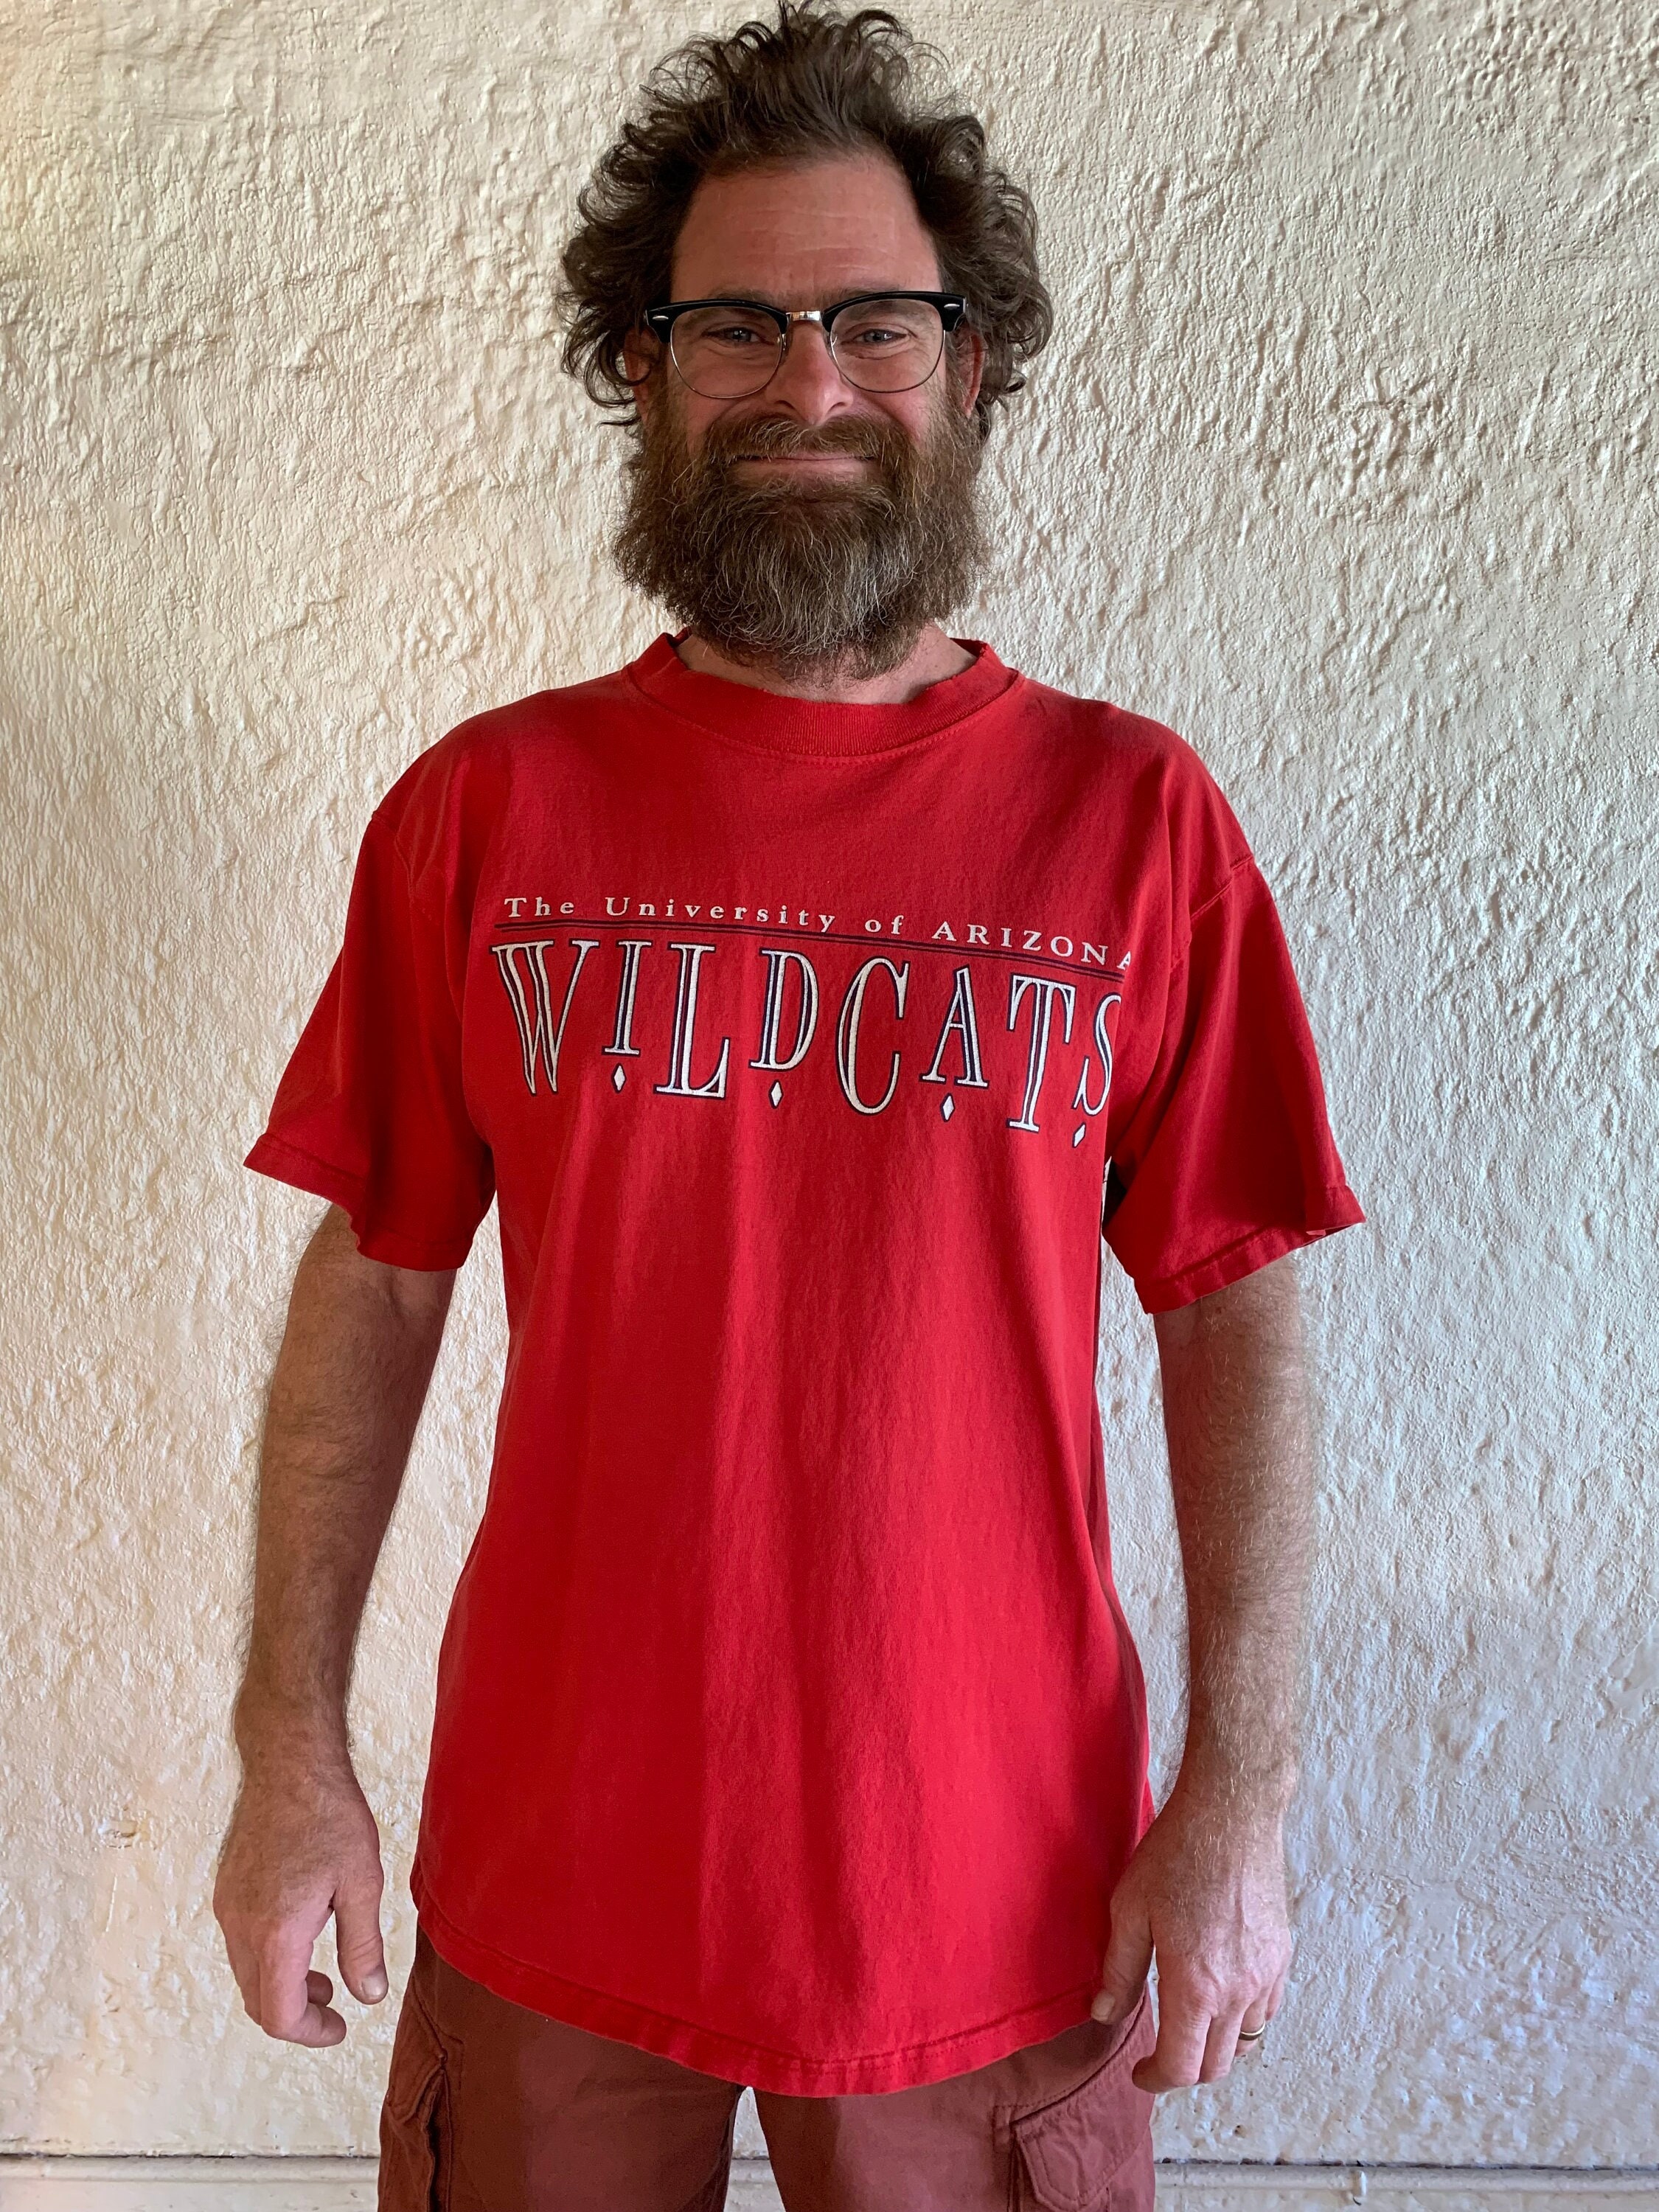 Arizona Wildcats Shirt Vintage - Etsy | T-Shirts